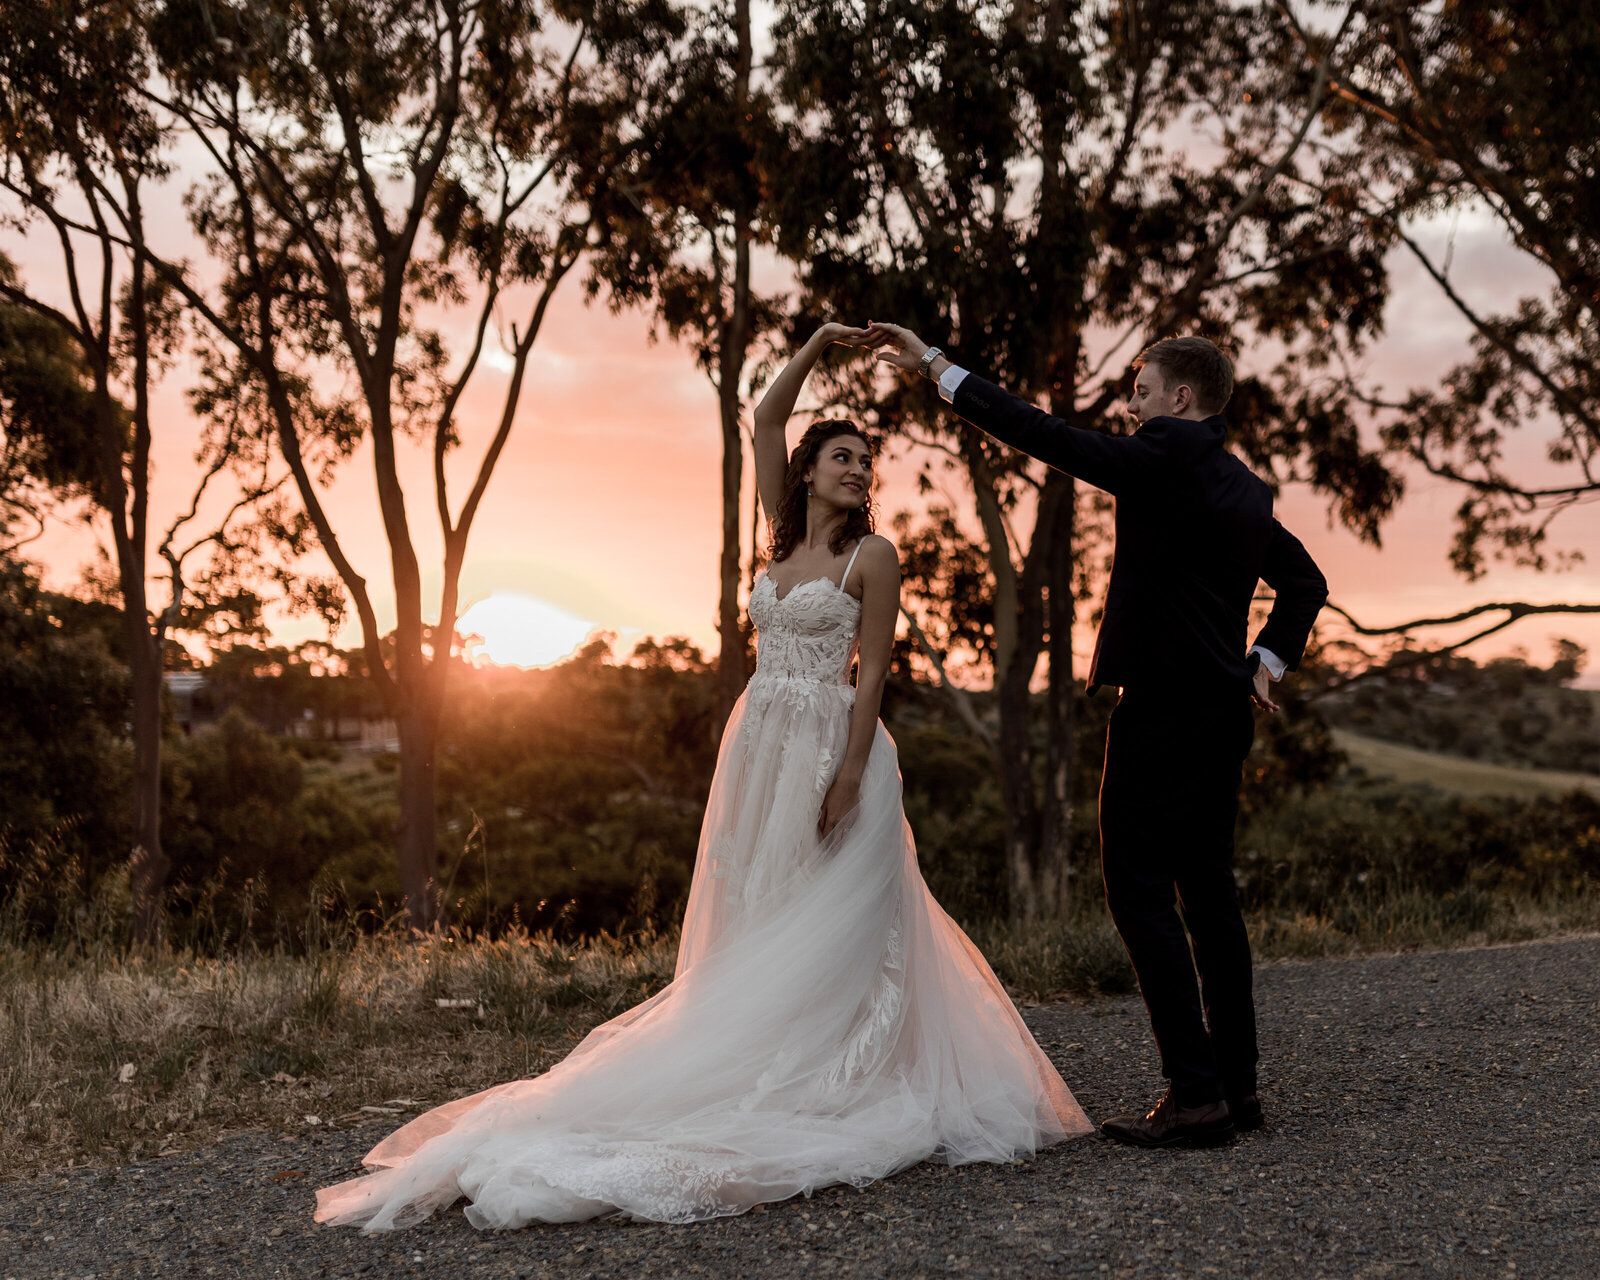 Emily-Ben-Rexvil-Photography-Adelaide-Wedding-Photographer-555